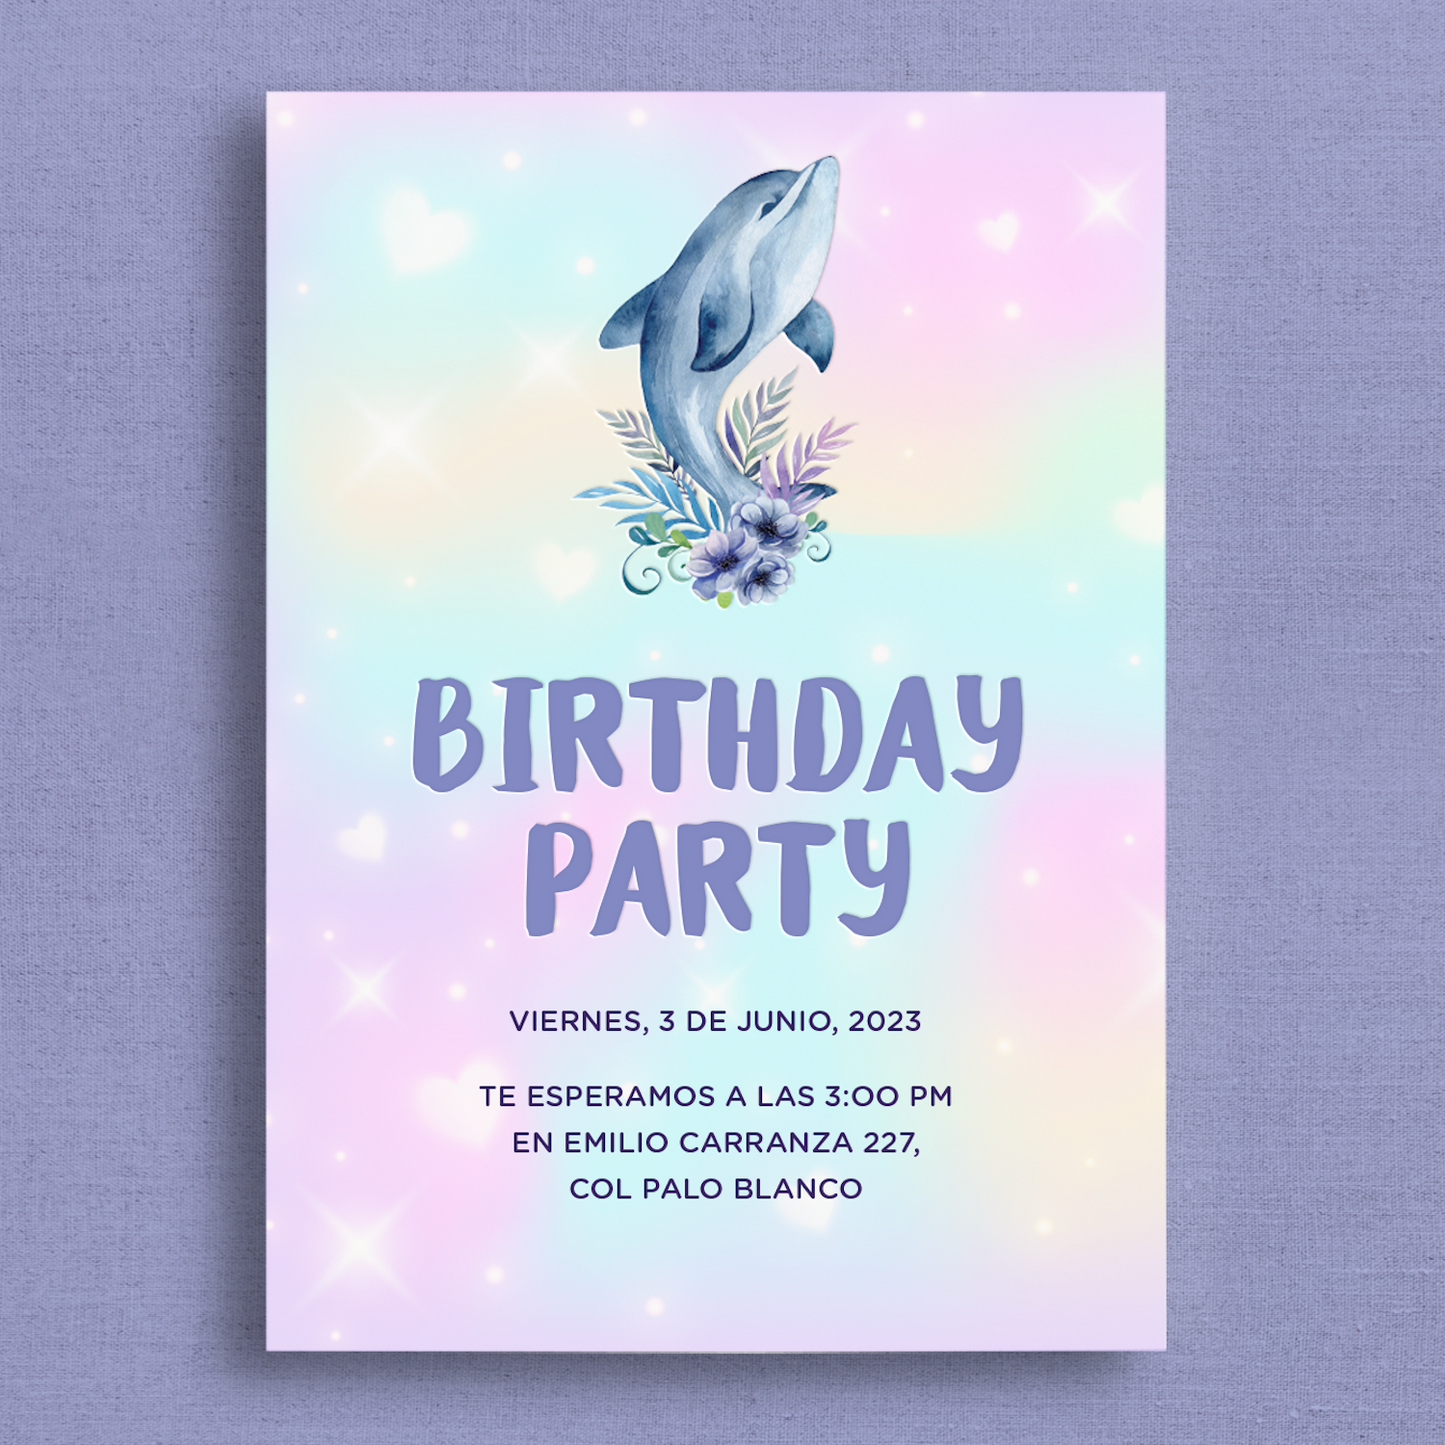 Dolphin birthday party